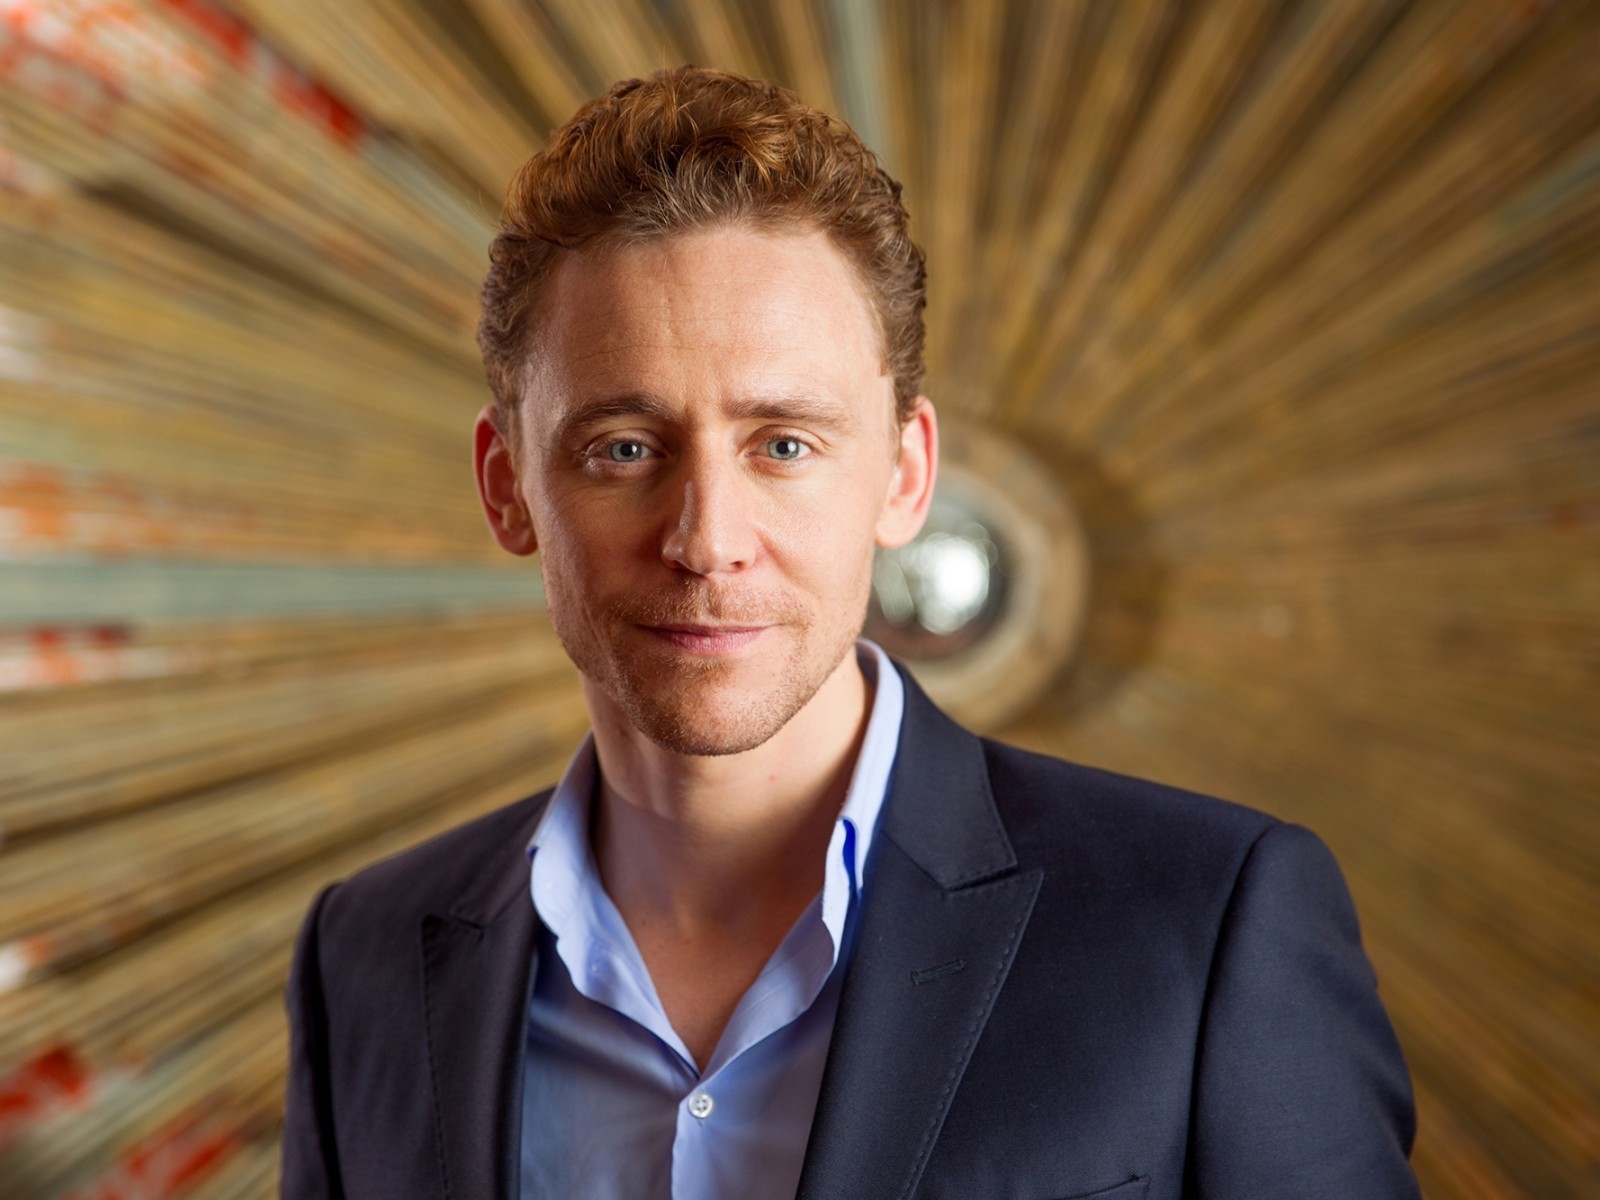 Tom Hiddleston Look for 1600 x 1200 resolution